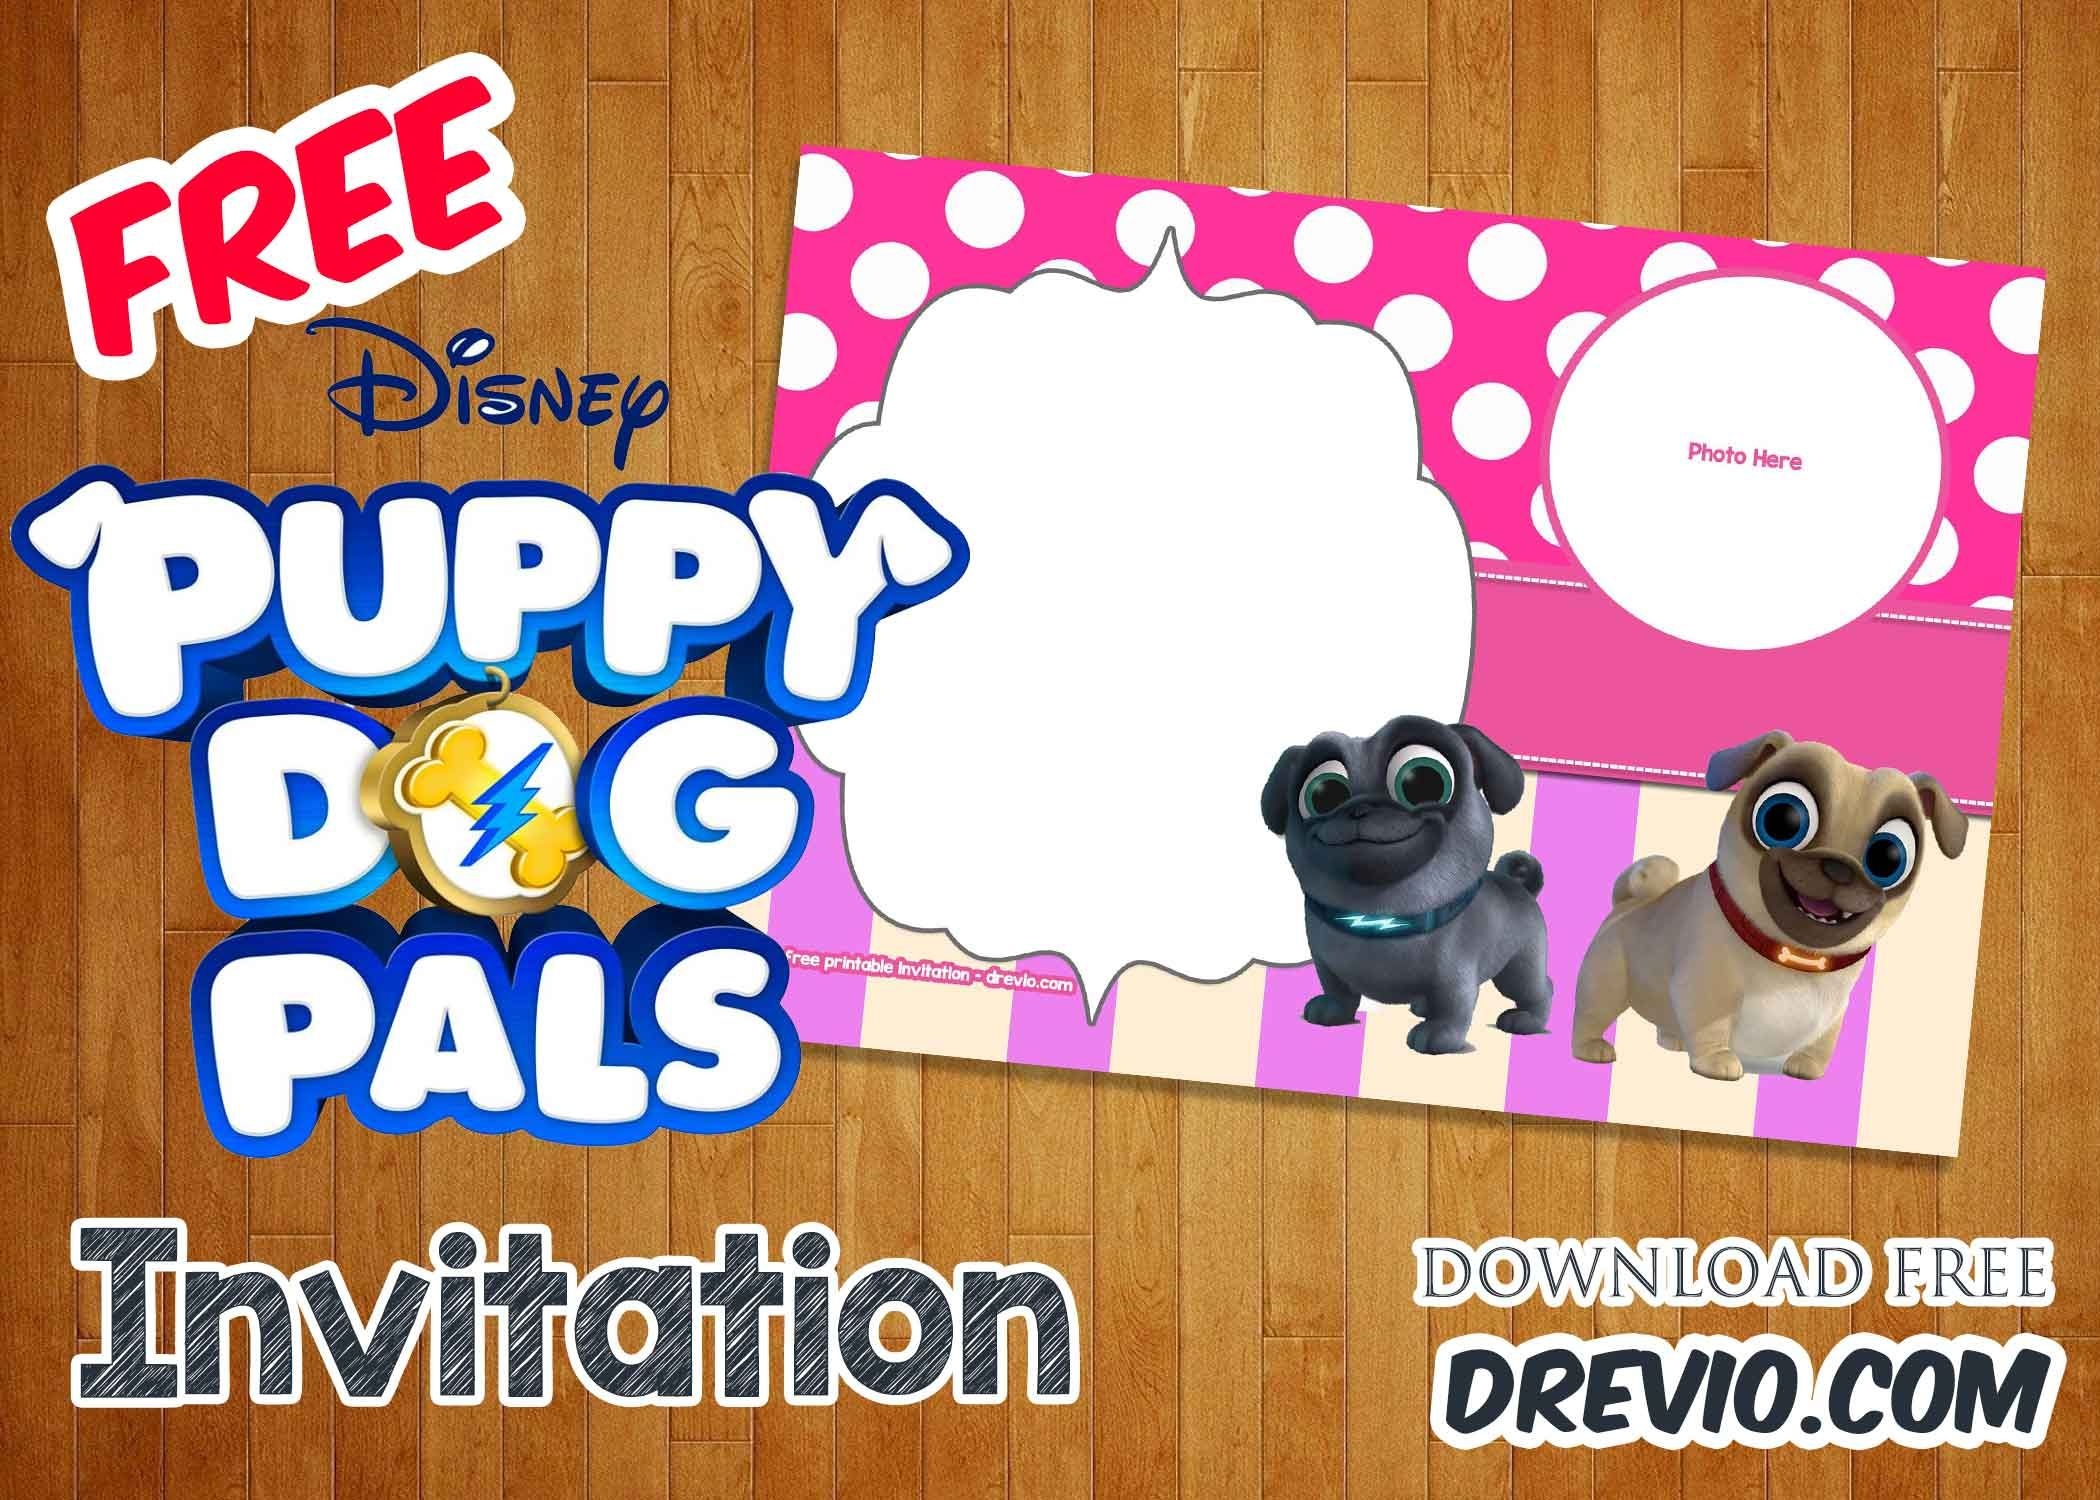 Free Disney Puppy Dog Pals Invitation Templates | Free Printable - Dog Birthday Invitations Free Printable